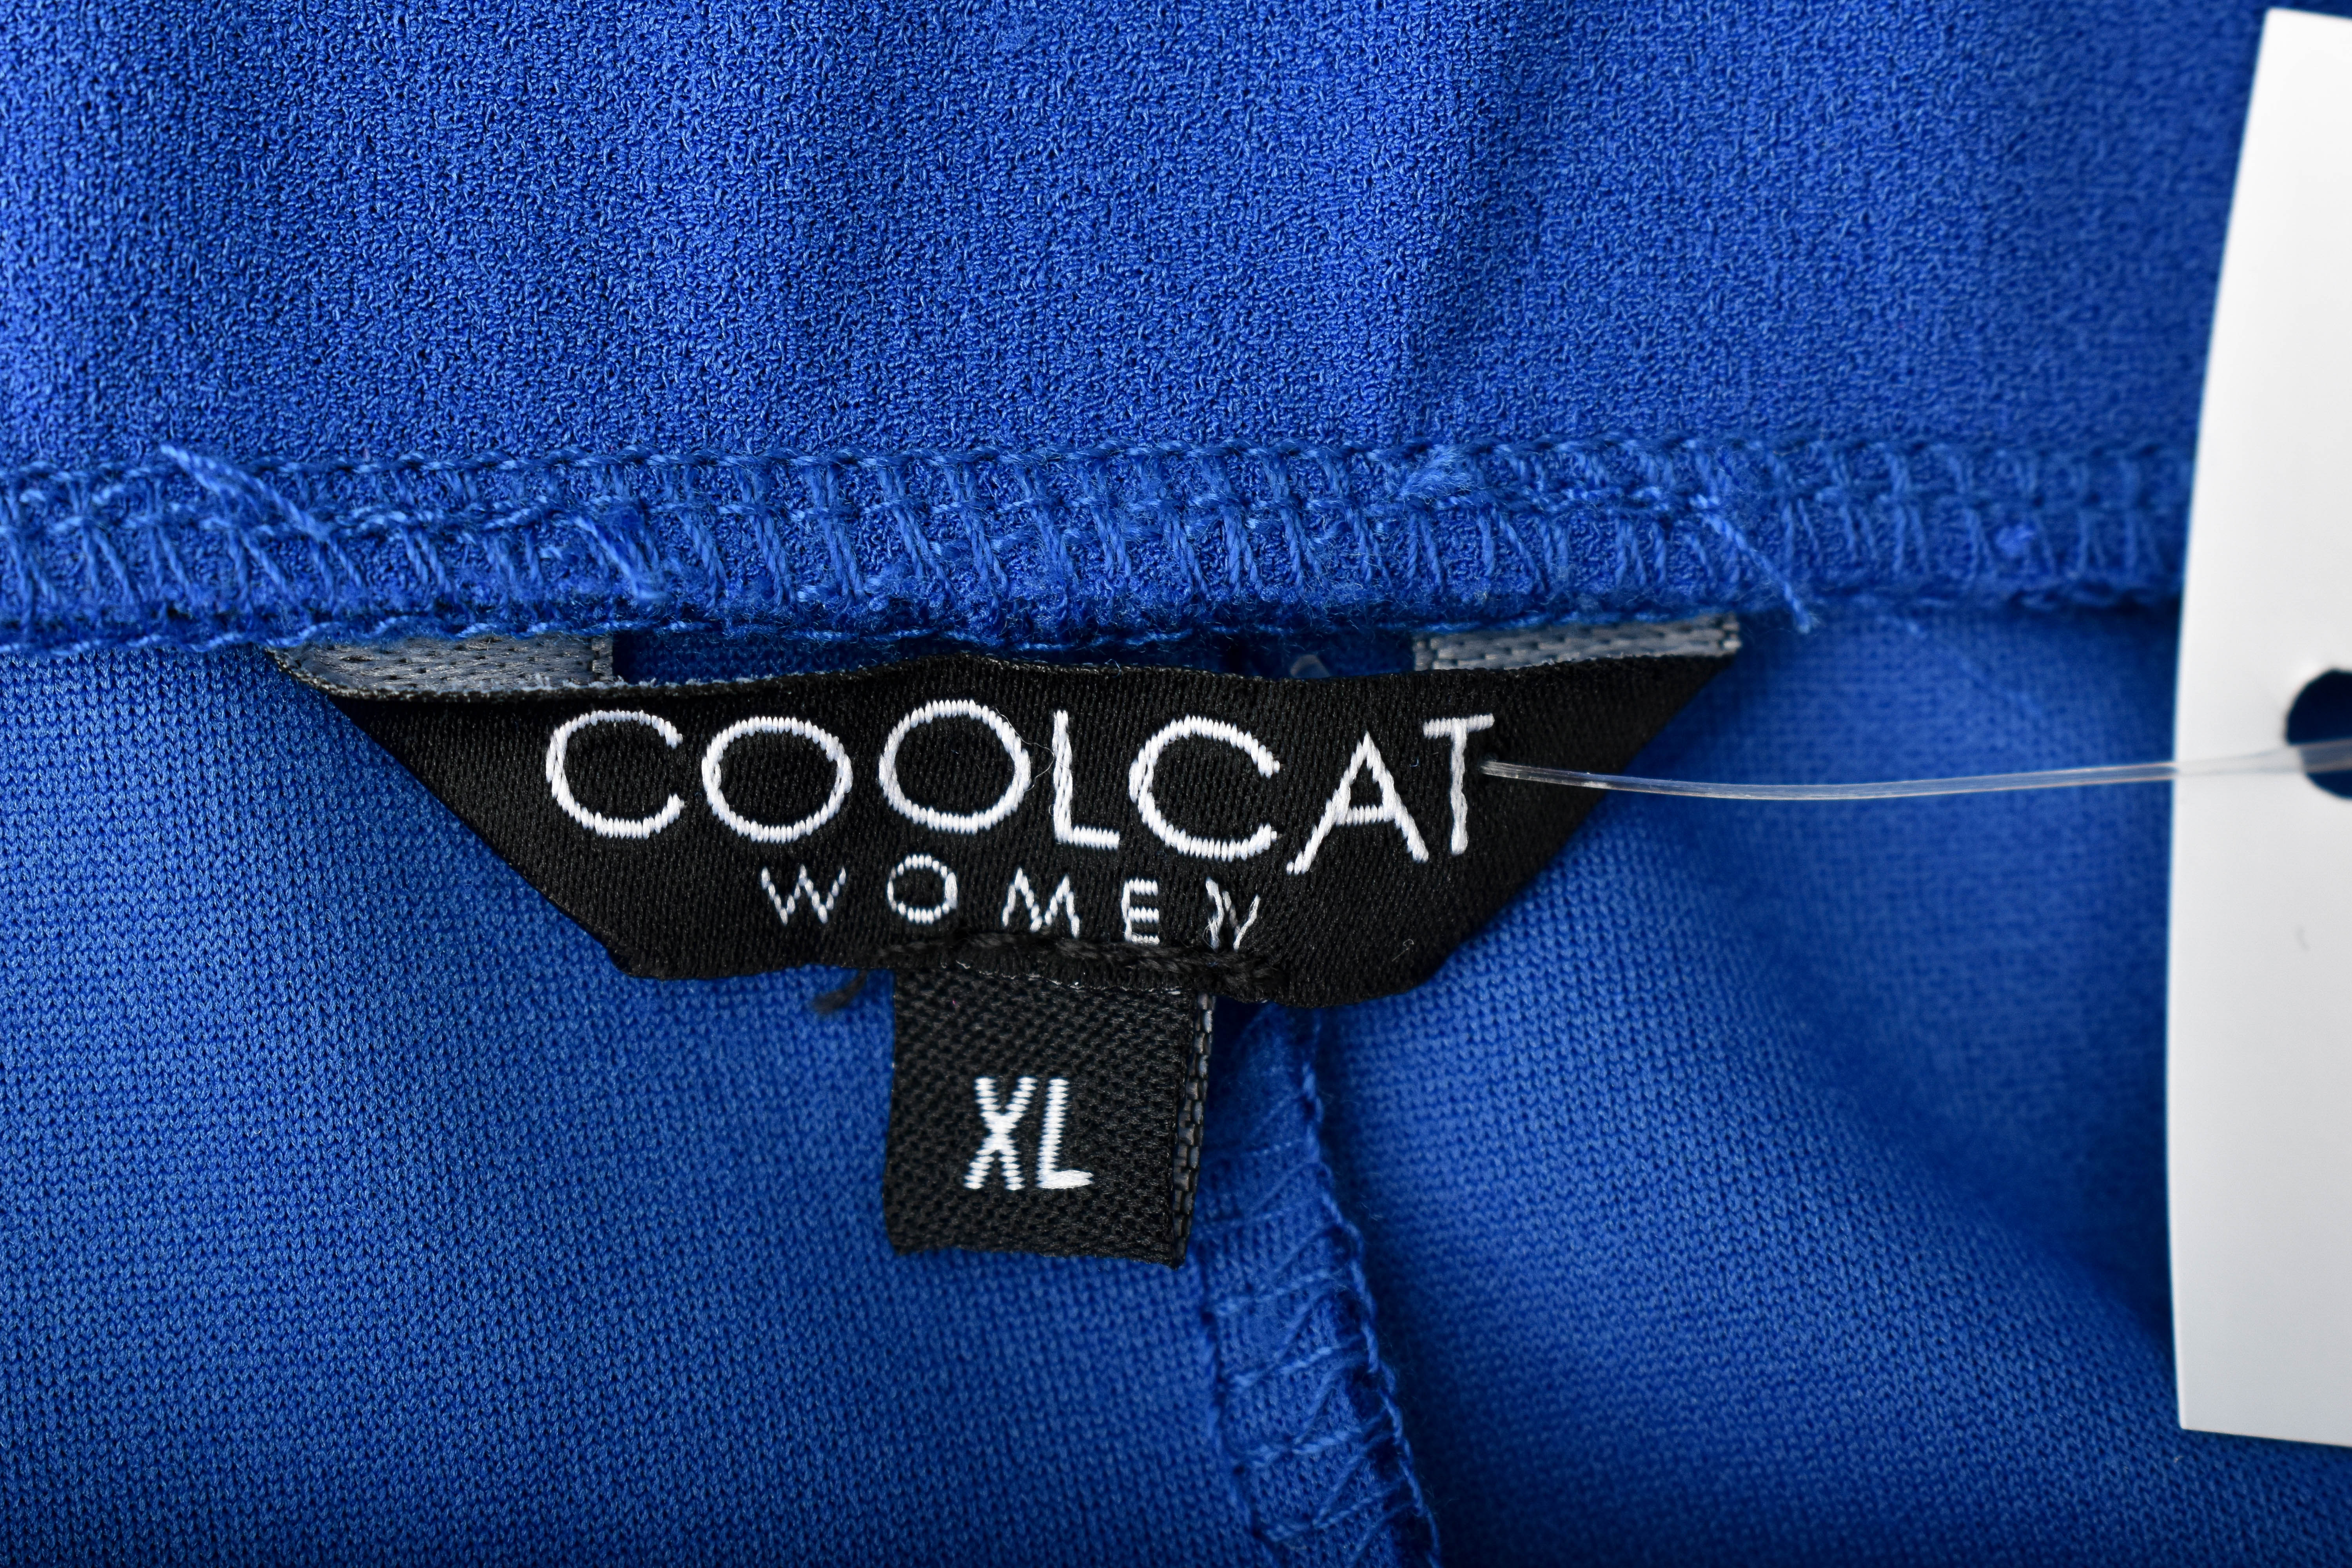 Skirt - CoolCat - 2